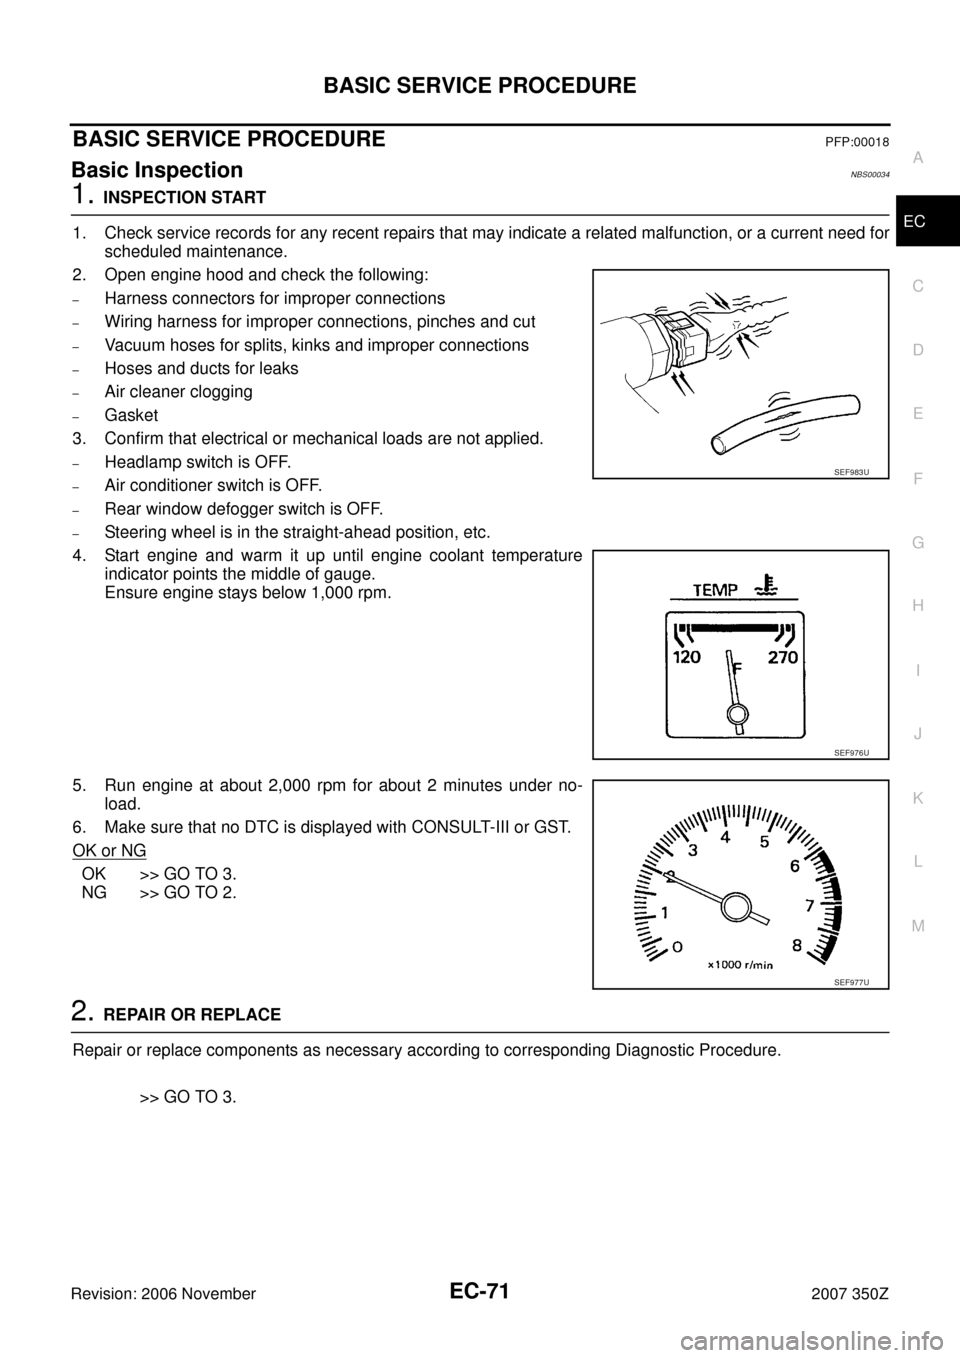 NISSAN 350Z 2007 Z33 Engine Control Manual PDF BASIC SERVICE PROCEDURE
EC-71
C
D
E
F
G
H
I
J
K
L
MA
EC
Revision: 2006 November2007 350Z
BASIC SERVICE PROCEDUREPFP:00018
Basic InspectionNBS00034
1. INSPECTION START
1. Check service records for any 